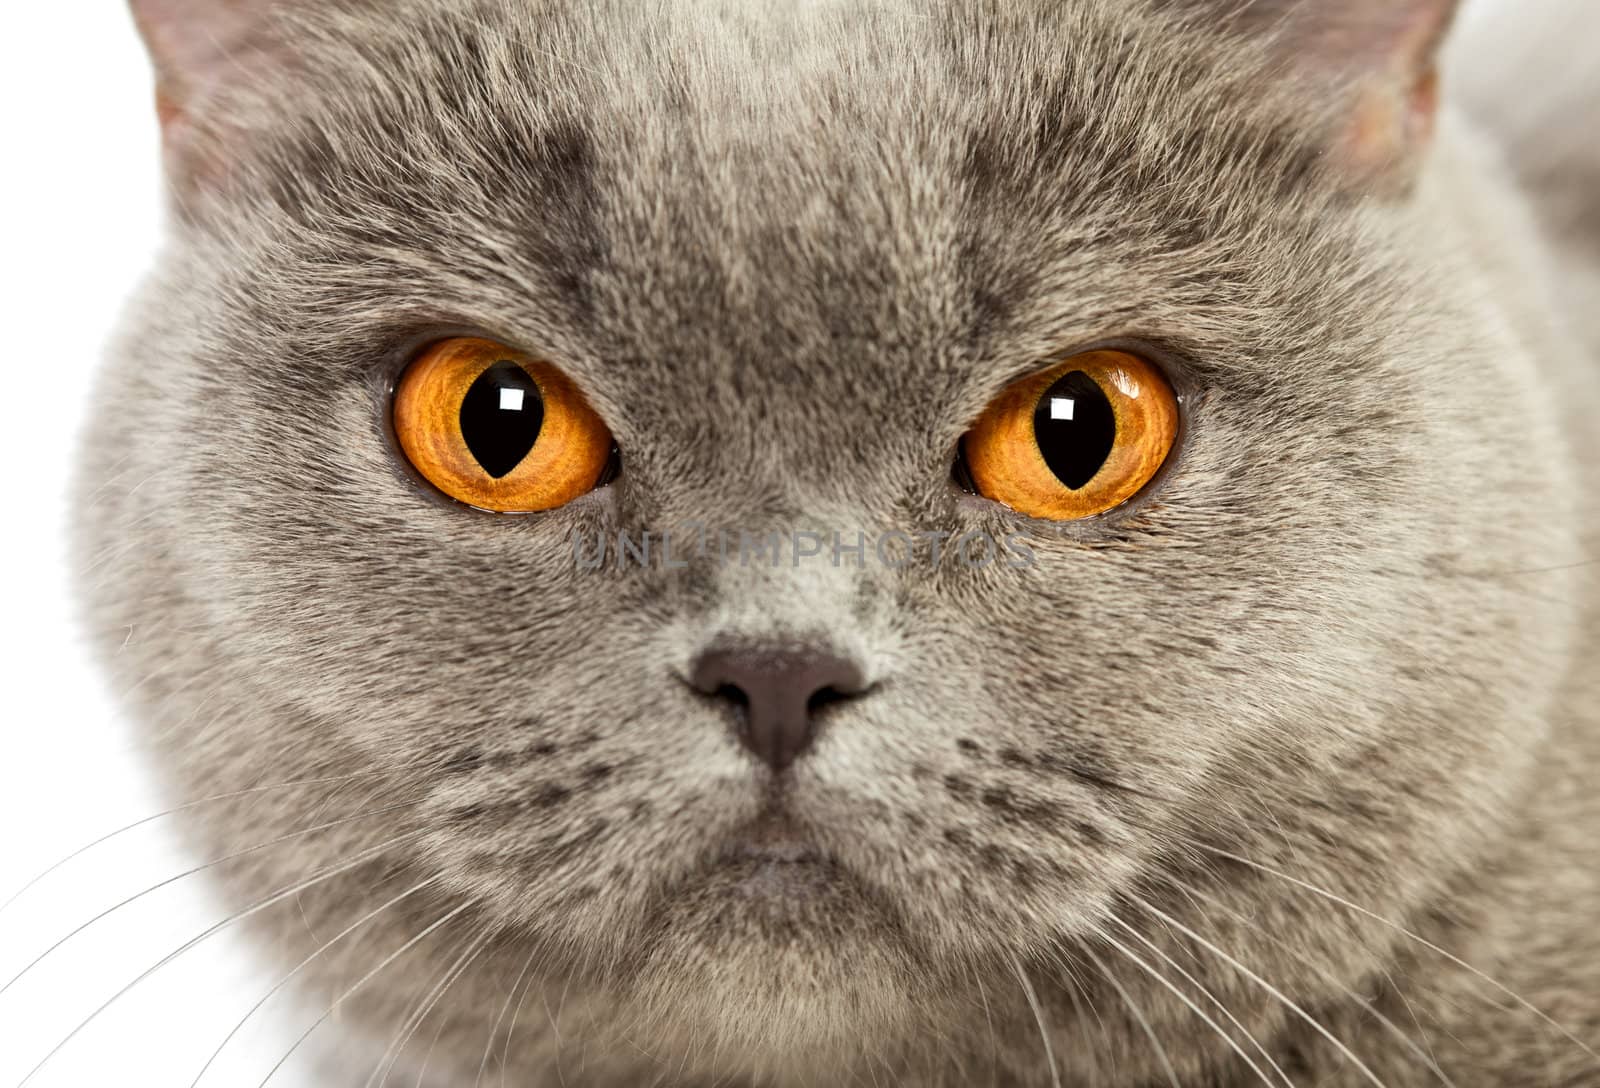 British Shorthair Cat by petr_malyshev